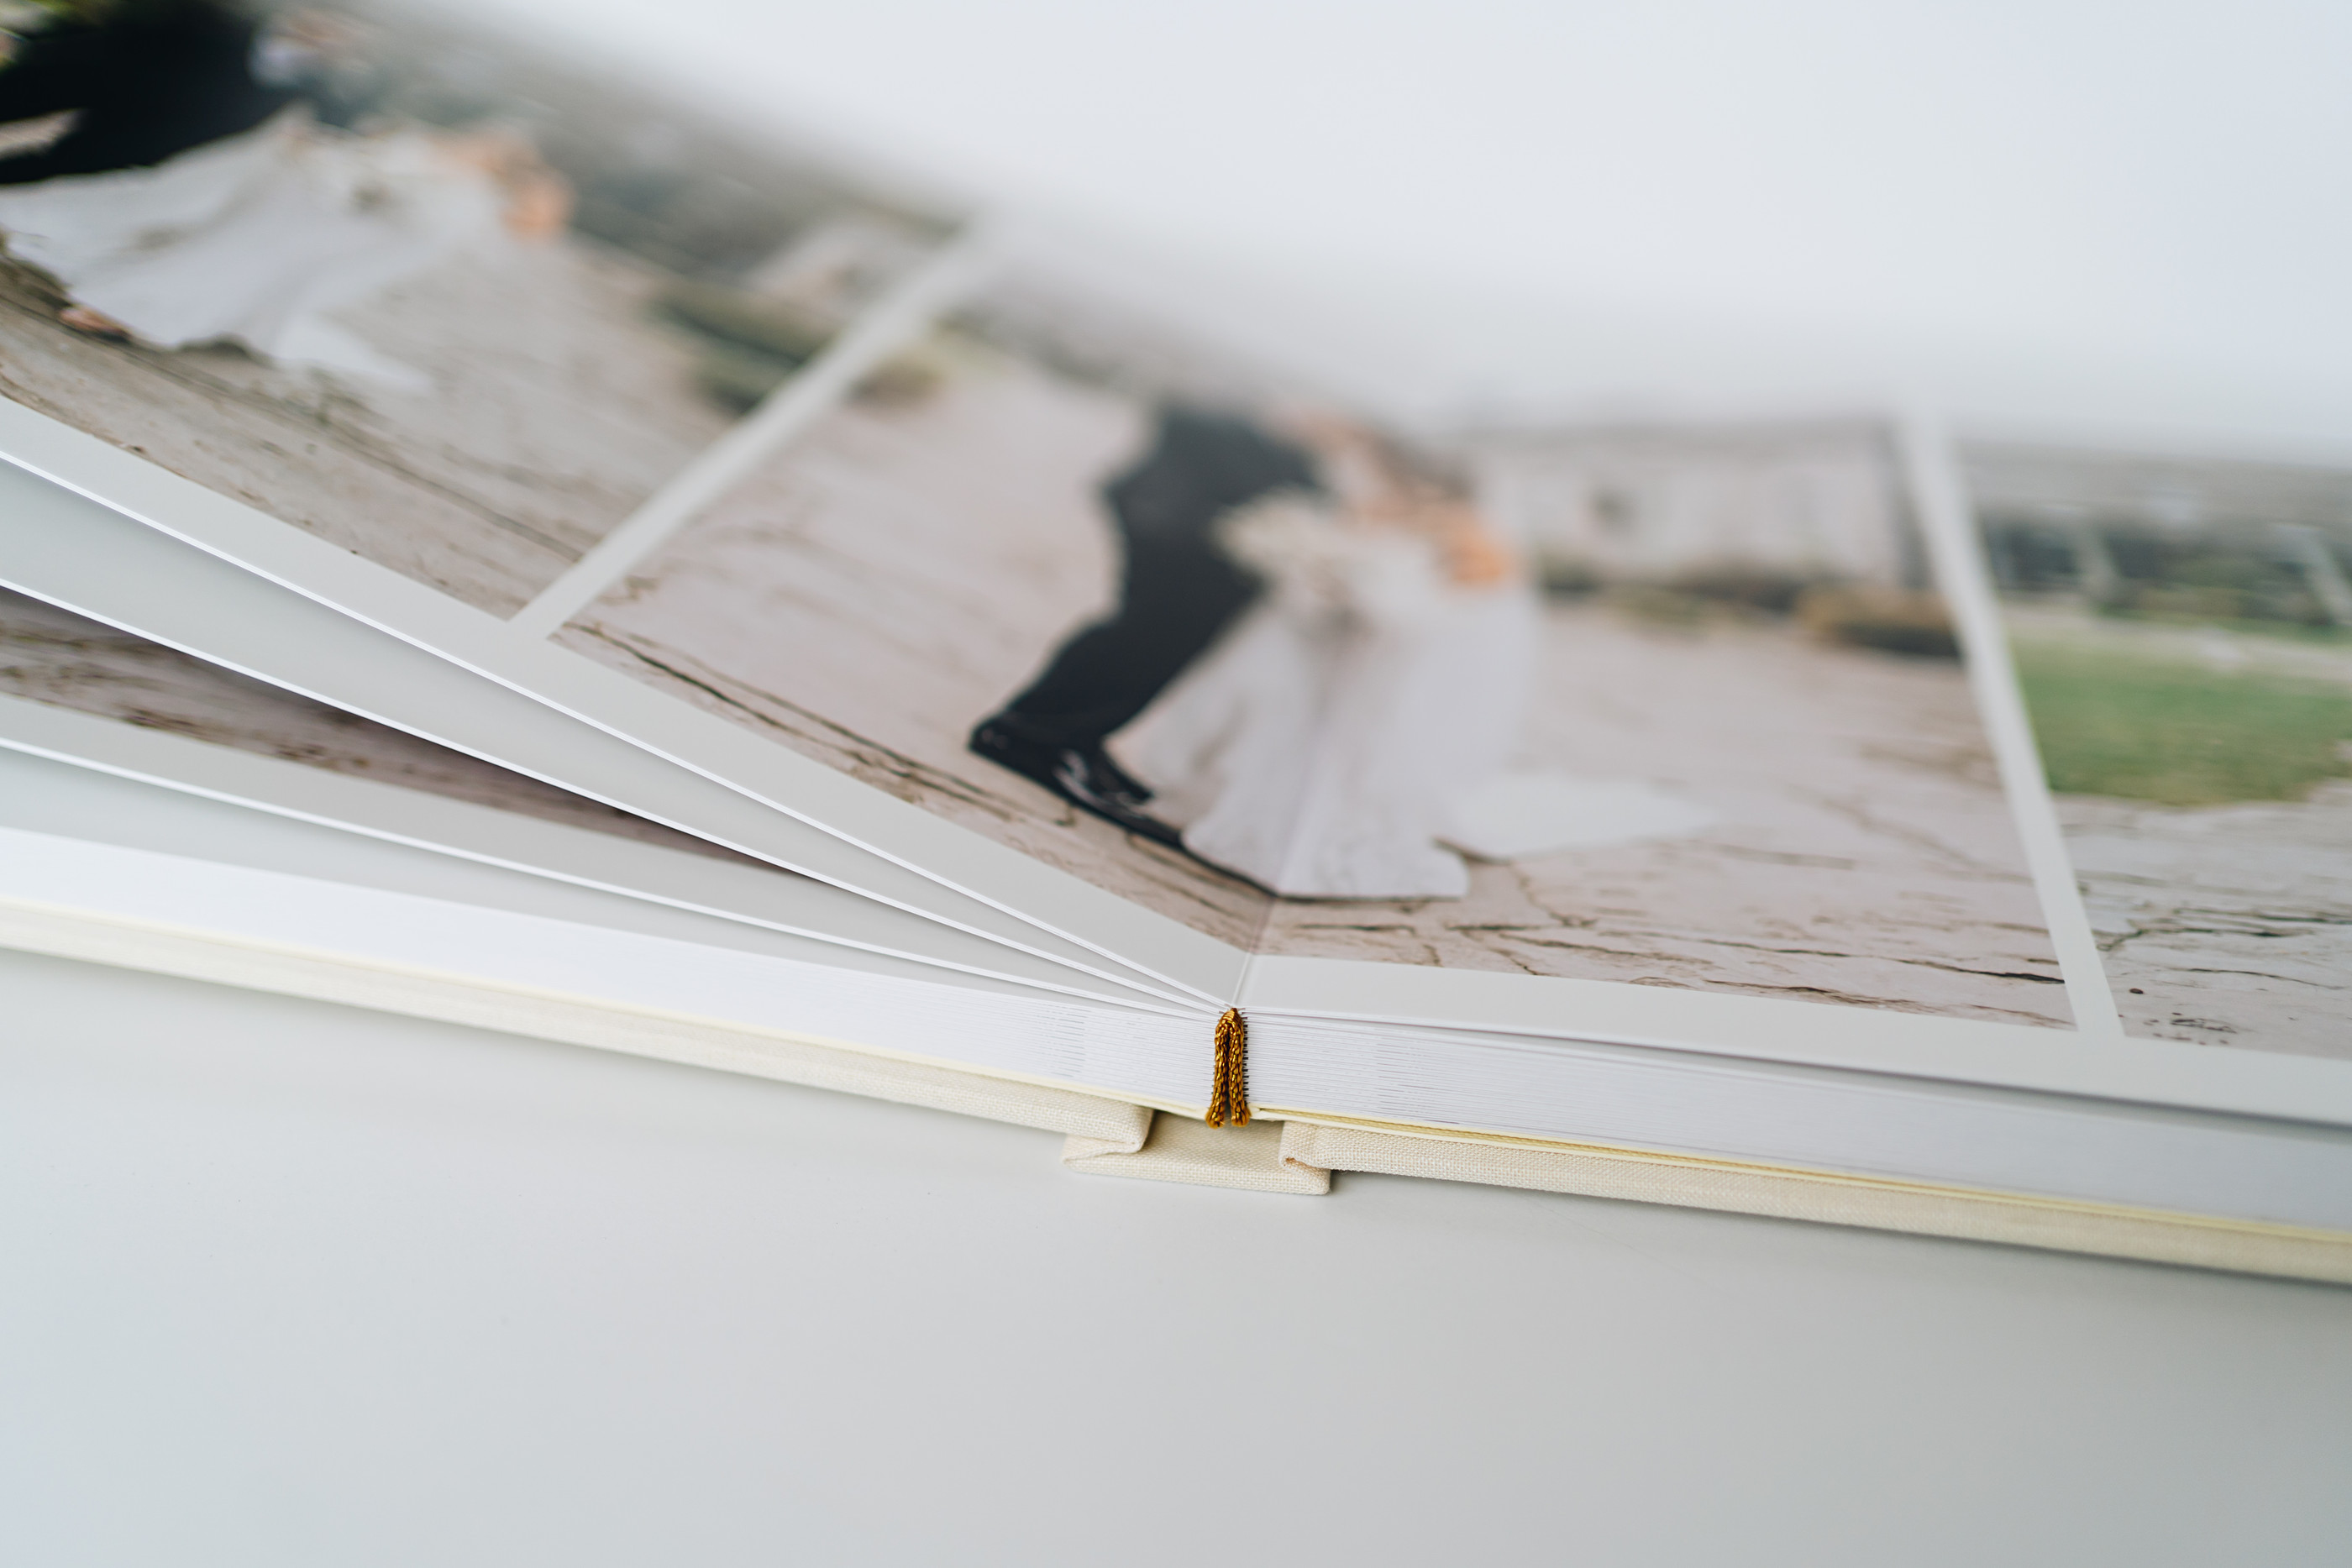 Professional Photo Books: Custom Photo Book Printing